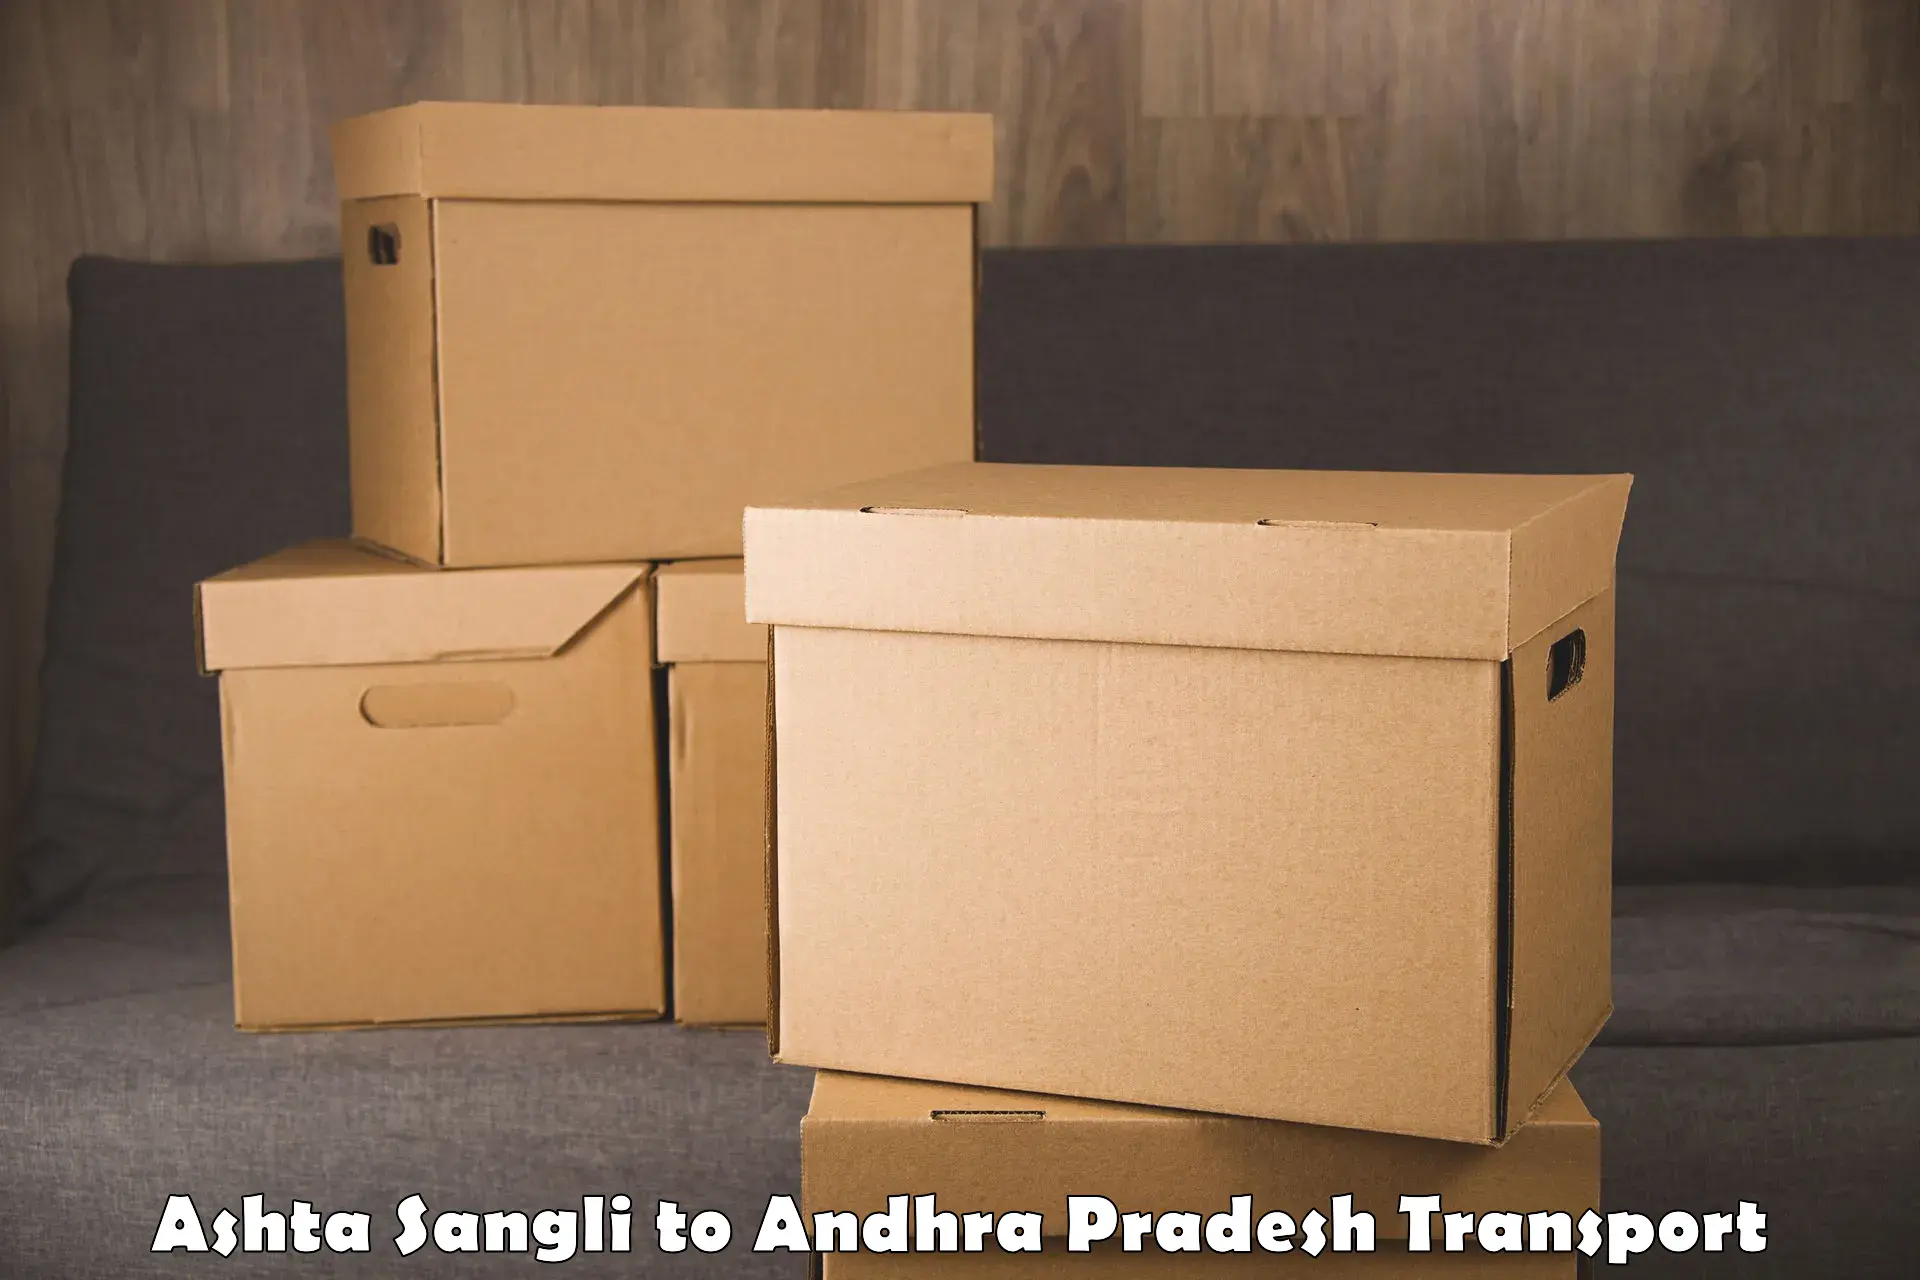 India truck logistics services Ashta Sangli to Mangalagiri